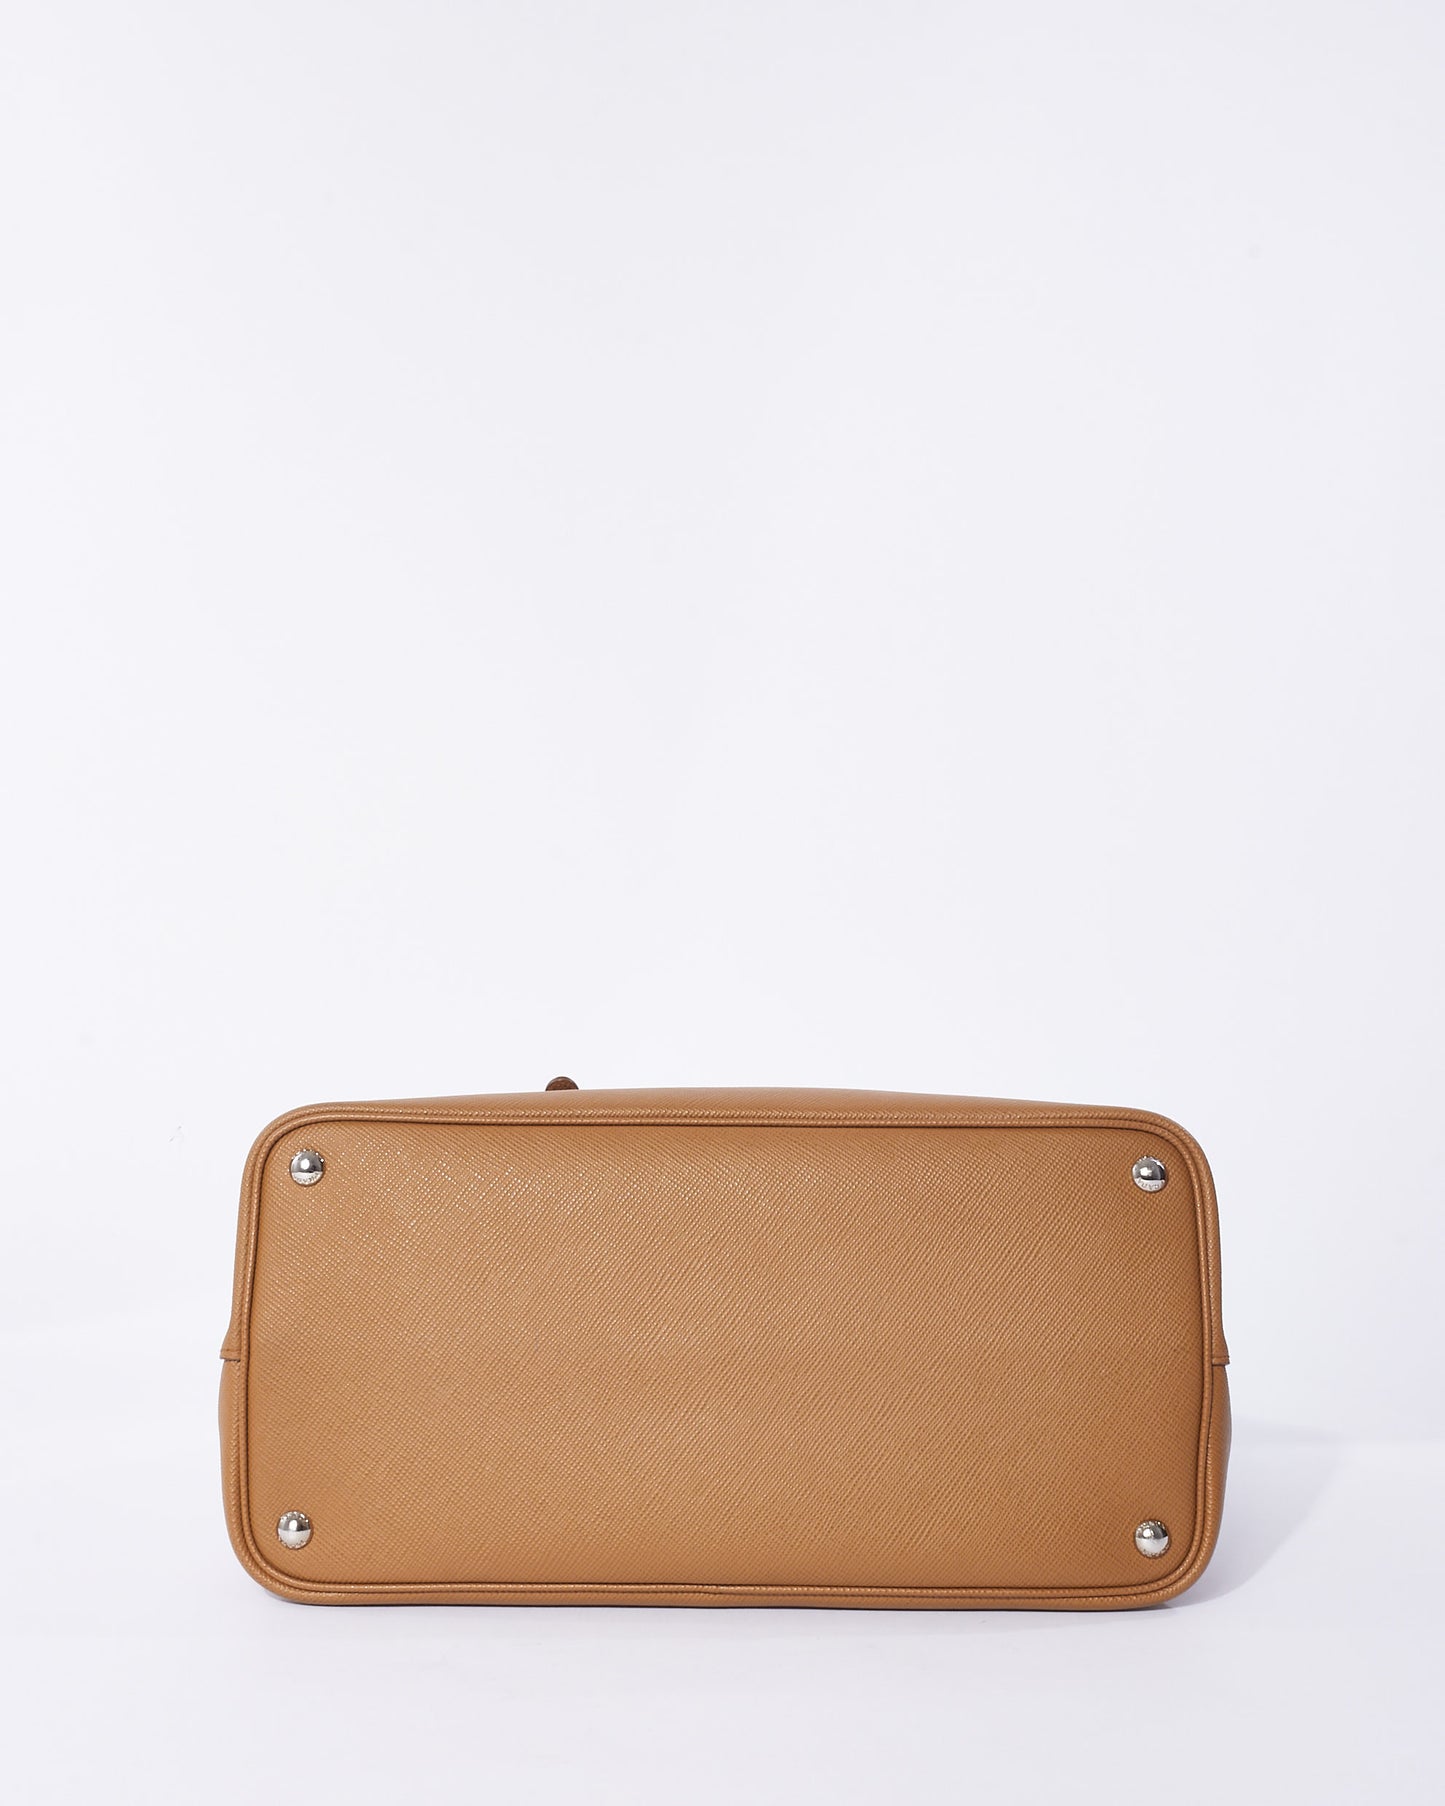 Prada Tan Saffiano Leather Double Medium Convertible Tote Bag